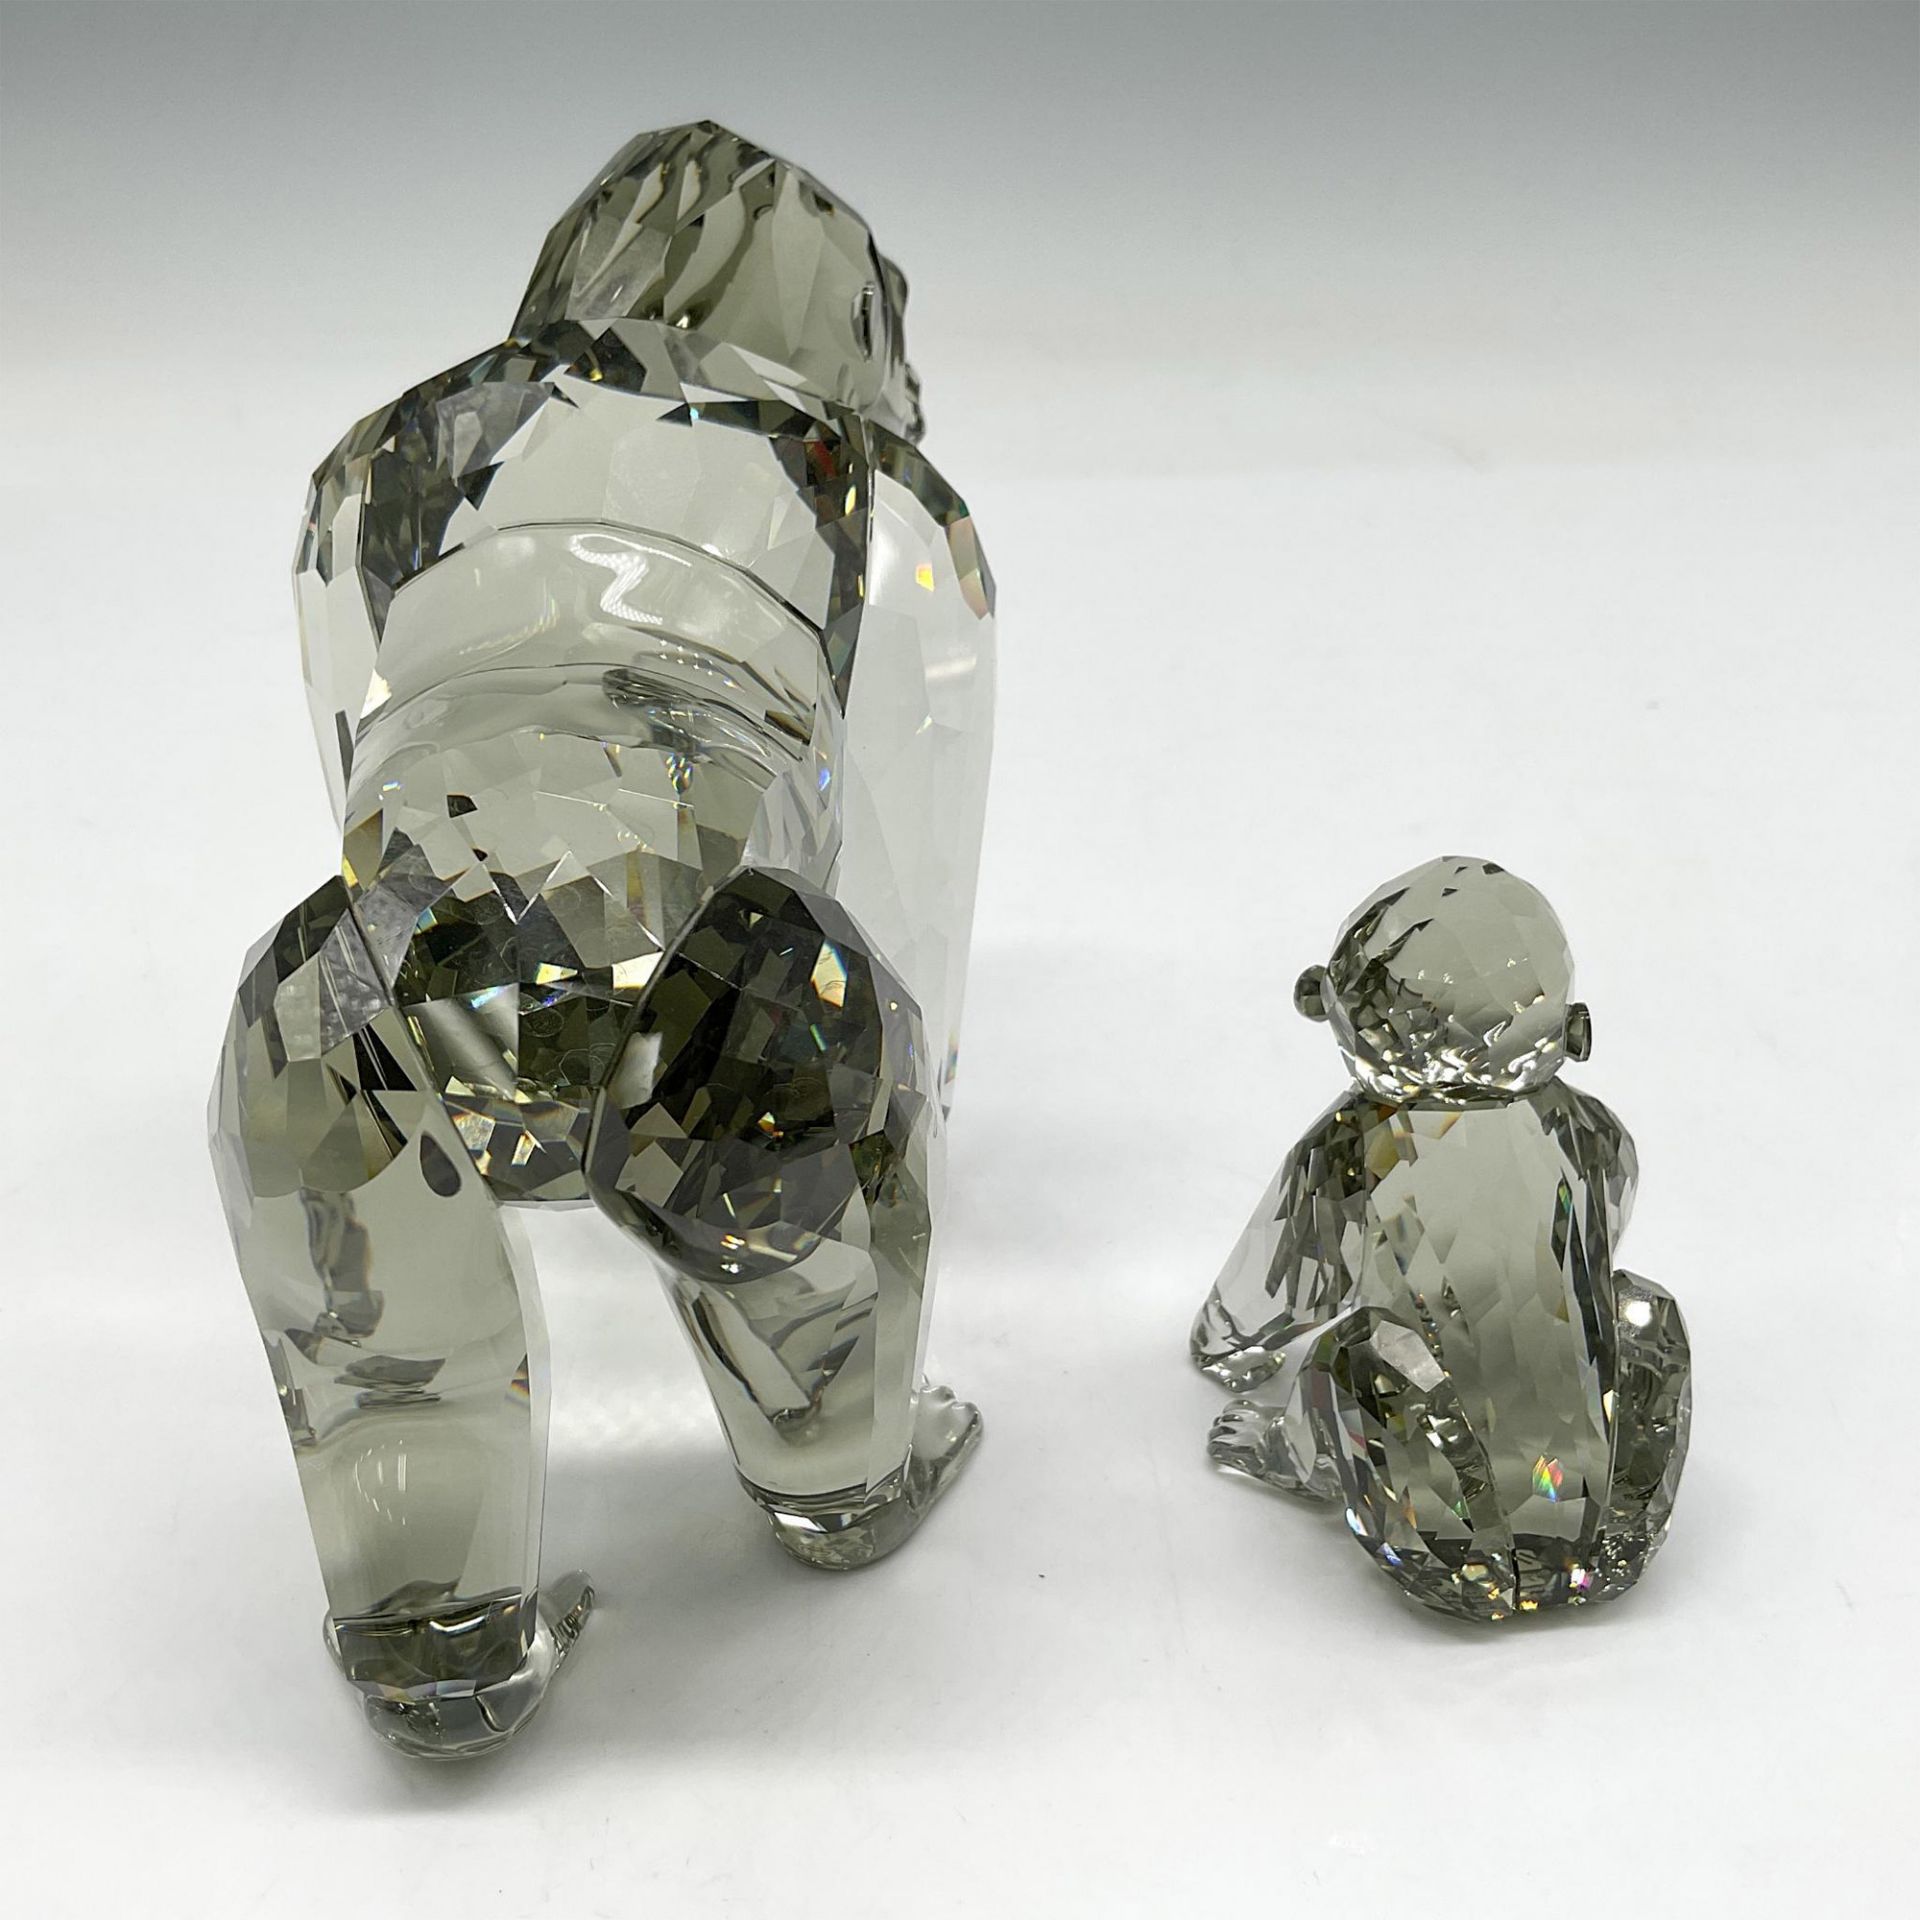 Swarovski Silver Crystal Society Figurine, Gorillas - Image 2 of 4